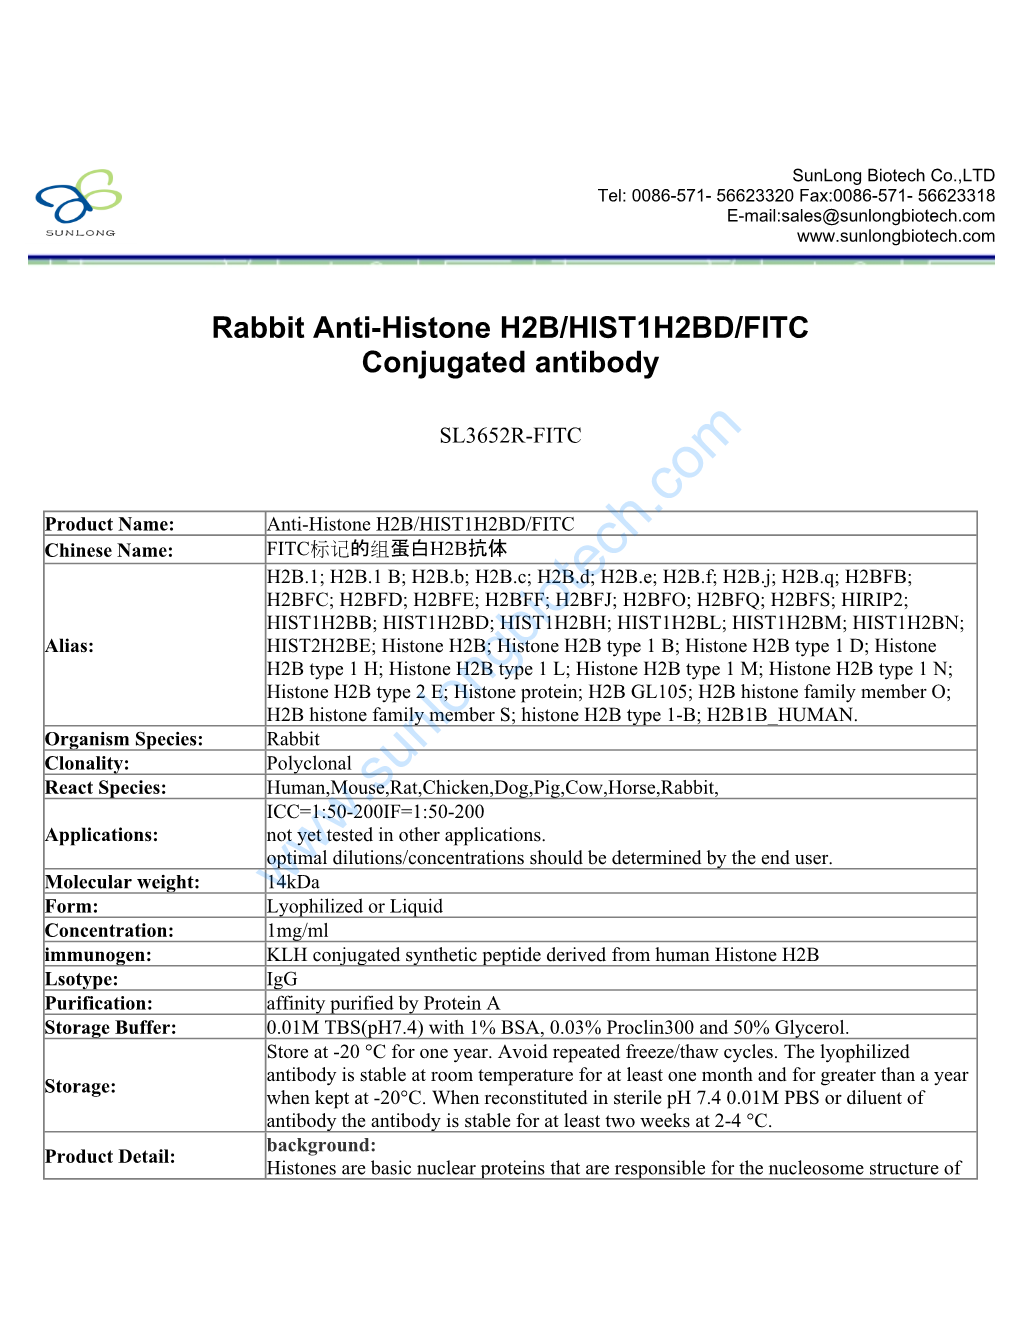 Rabbit Anti-Histone H2B/HIST1H2BD/FITC Conjugated Antibody